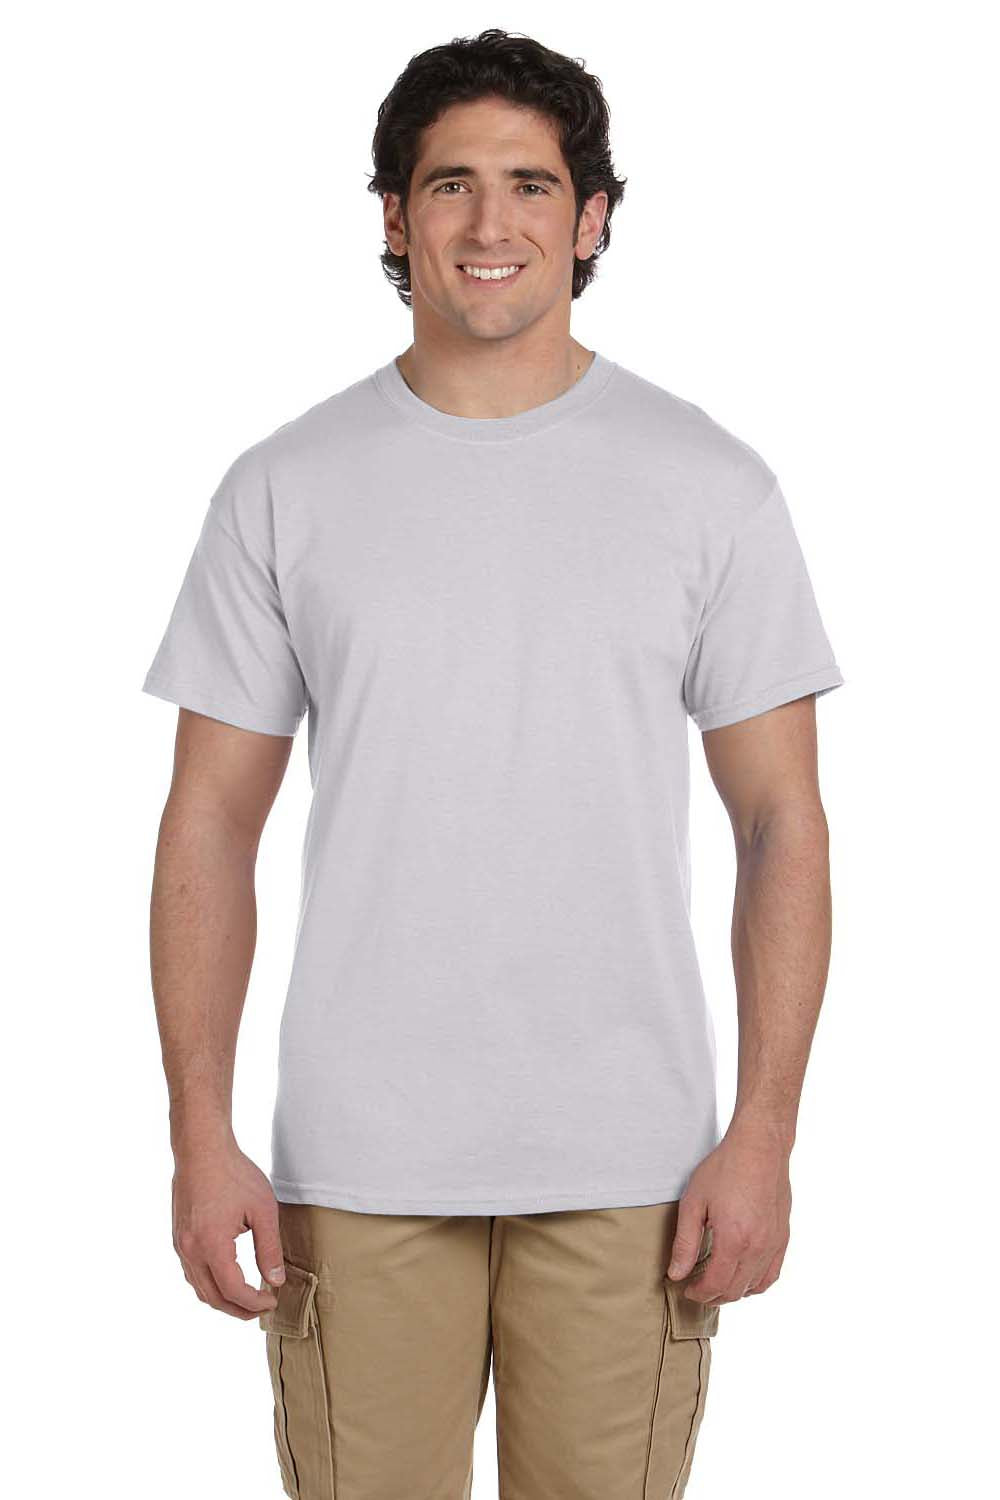 Hanes 5170 Mens EcoSmart Short Sleeve Crewneck T-Shirt Light Steel Grey Front